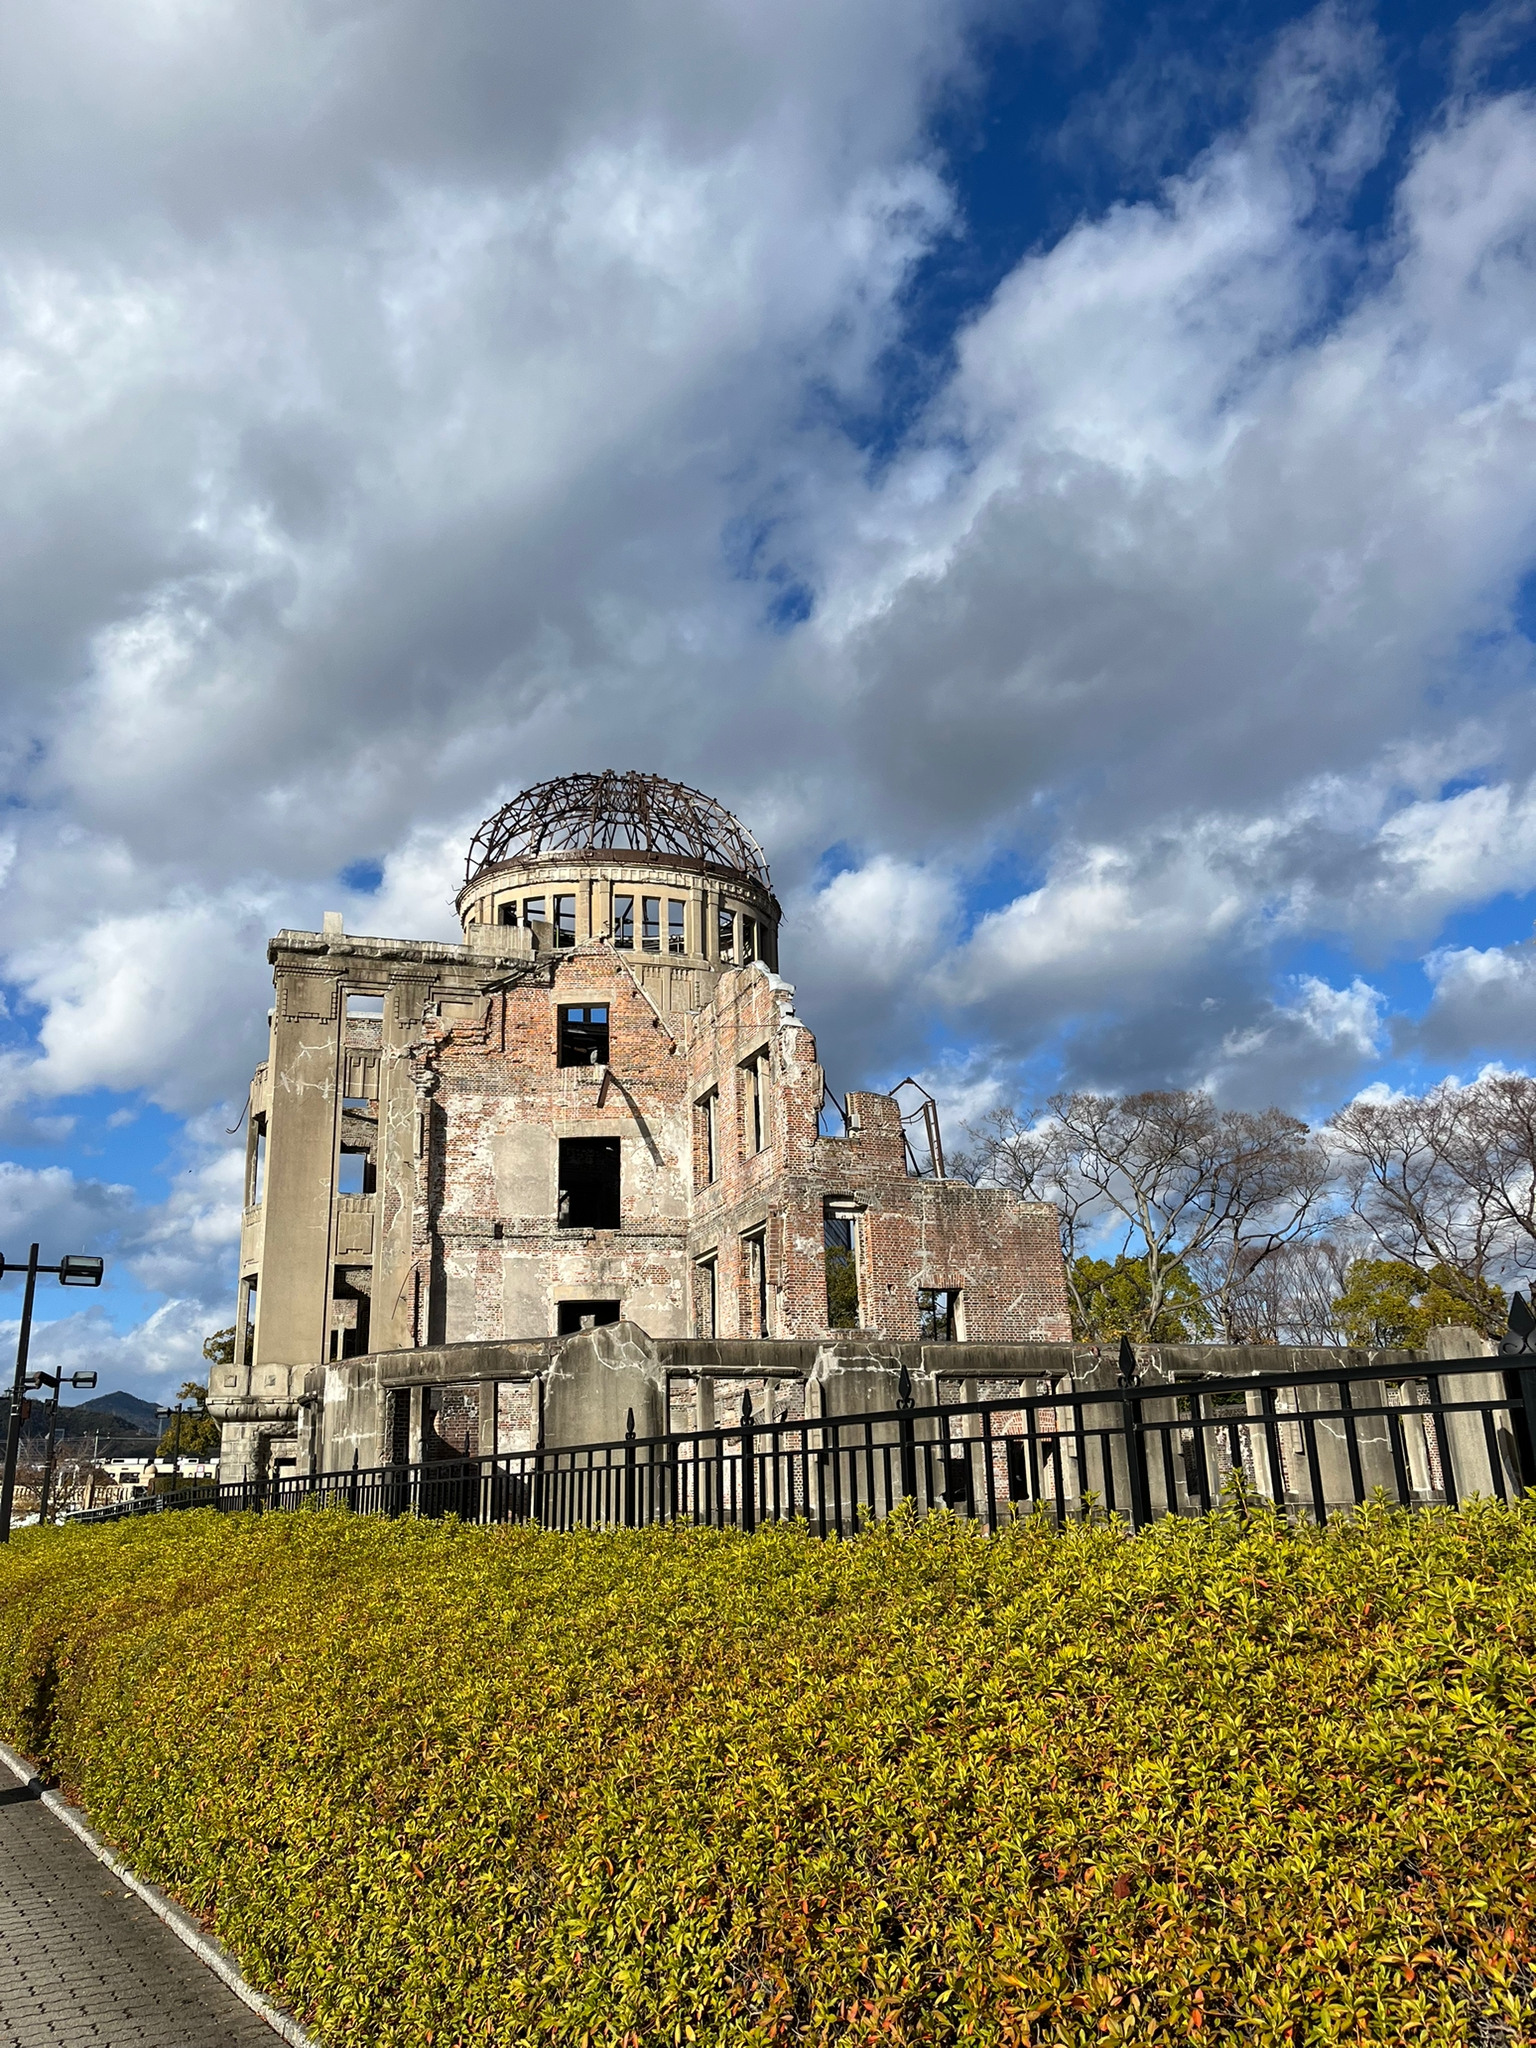 20221226-Hiroshima.jpg